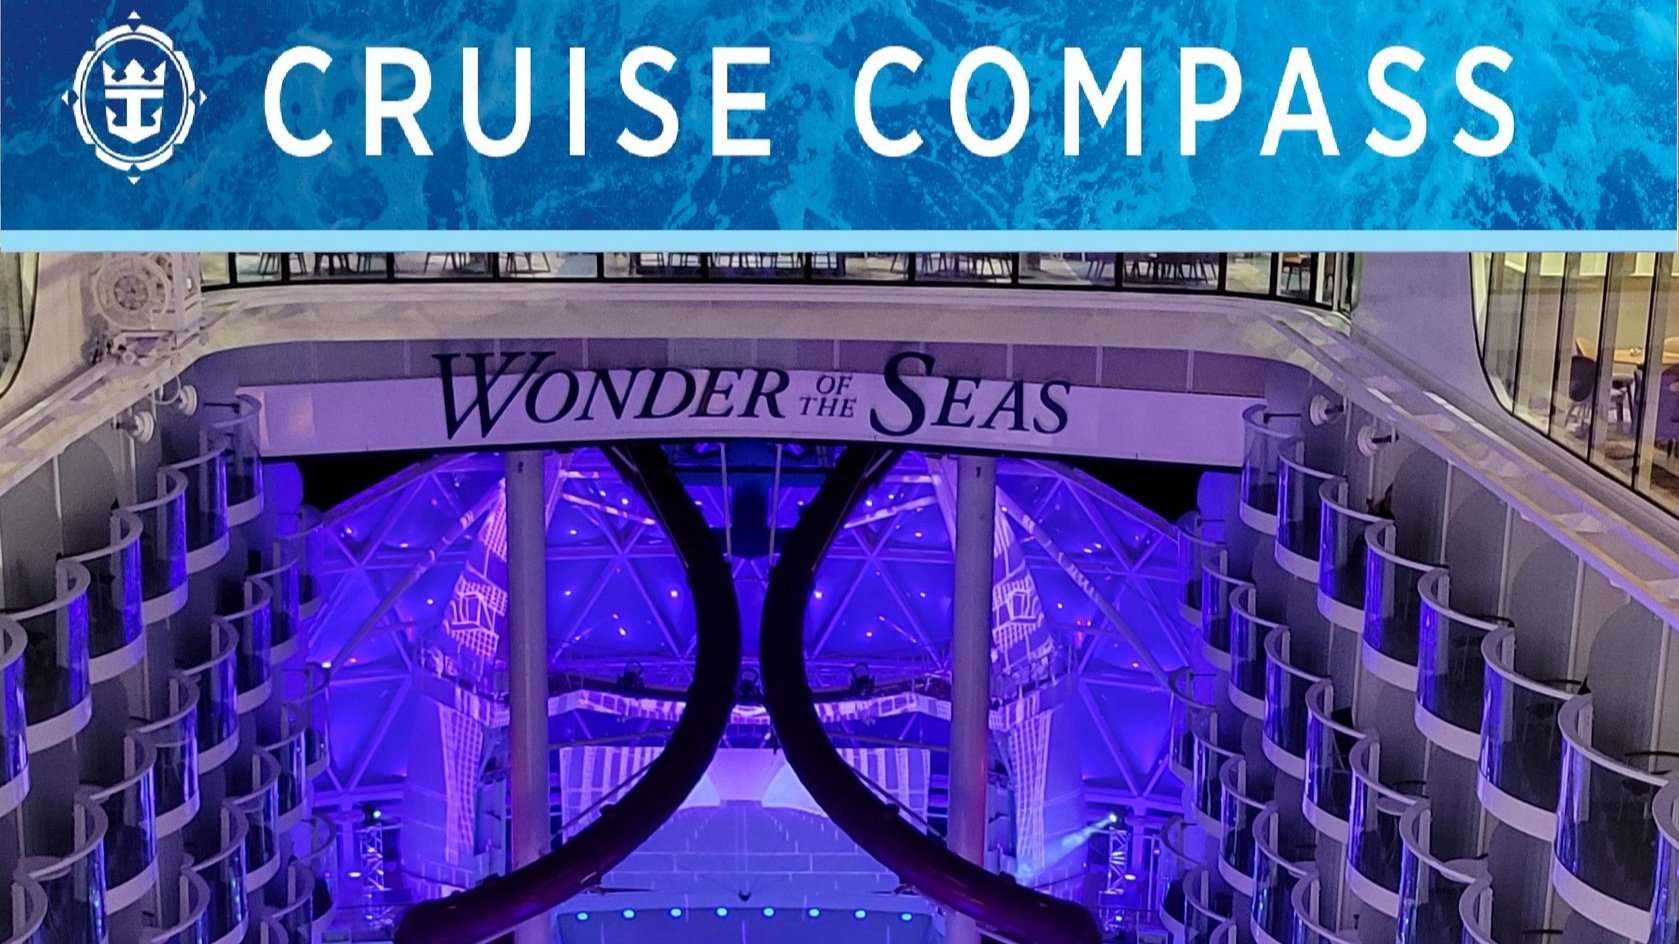 wonder of seas cruise compass